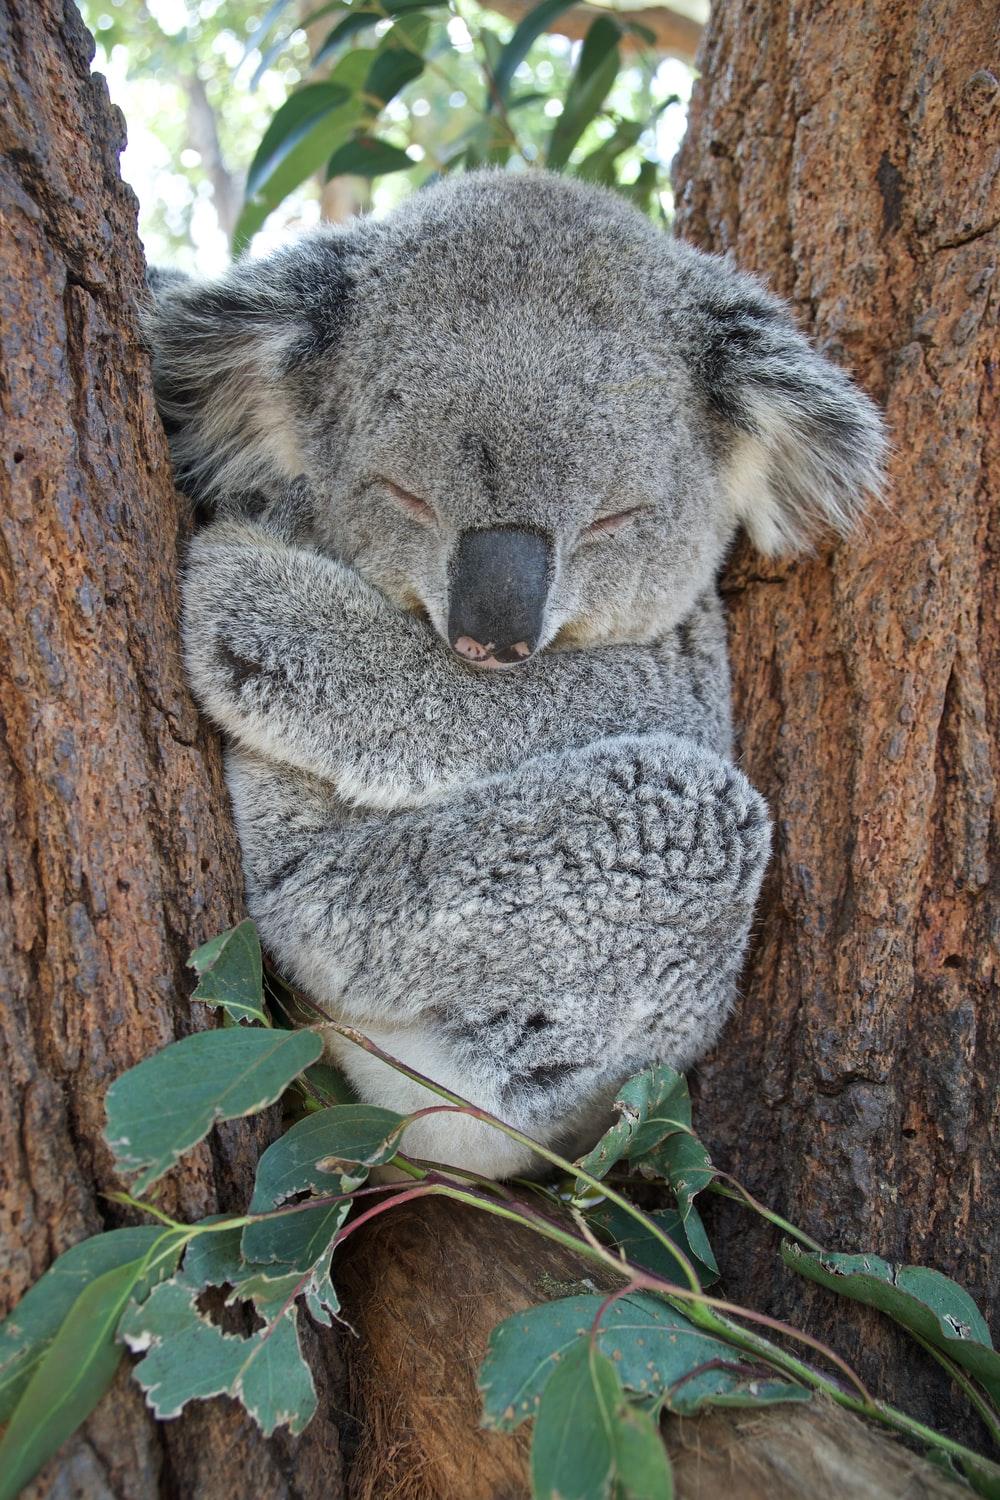 7458 Koala Wallpaper Images Stock Photos  Vectors  Shutterstock